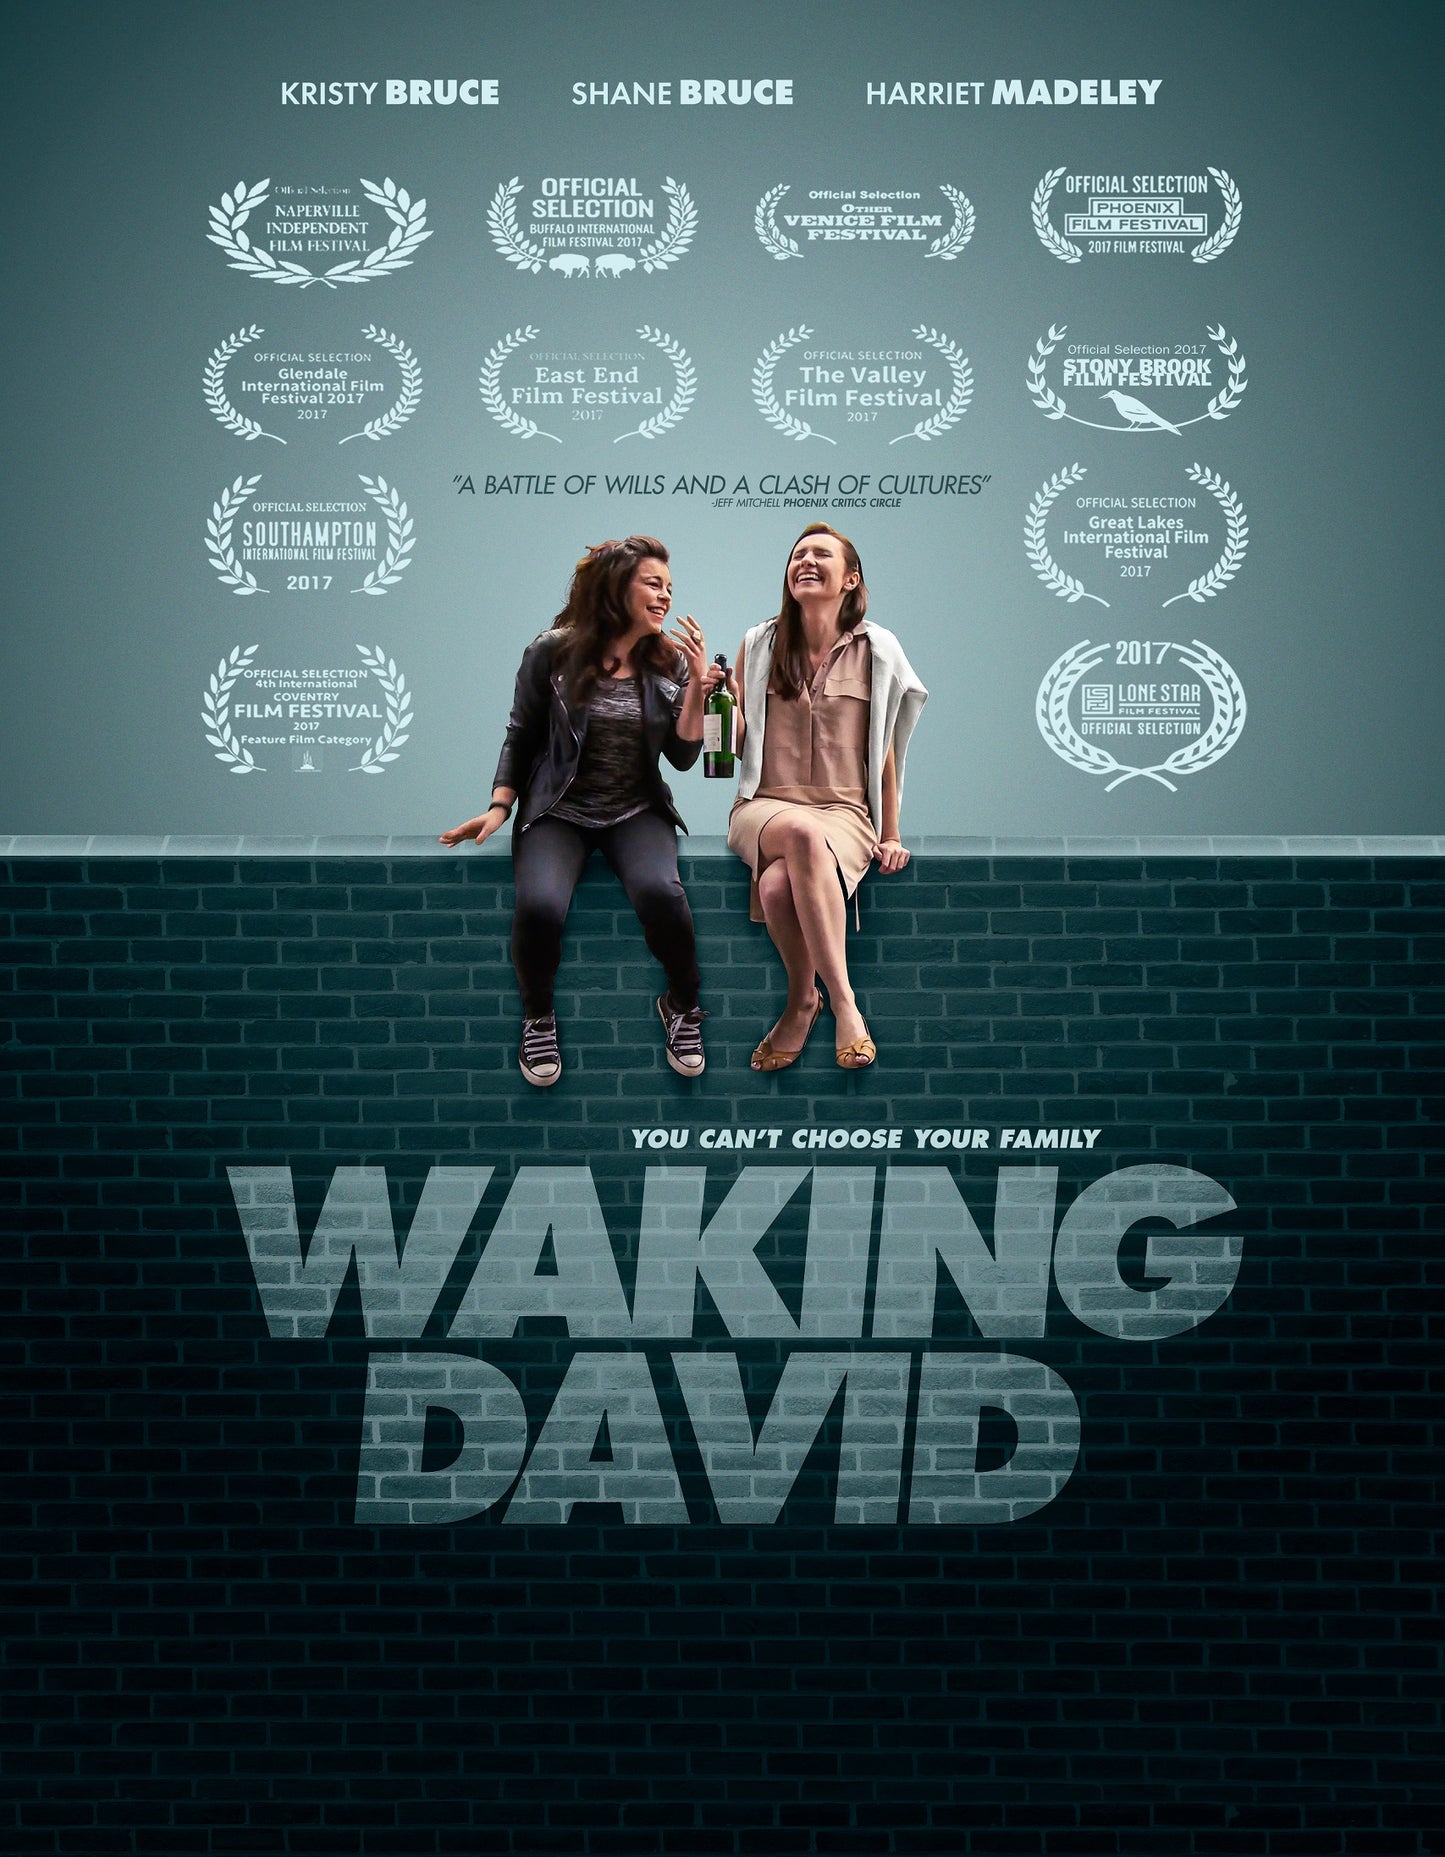 Waking David cover art